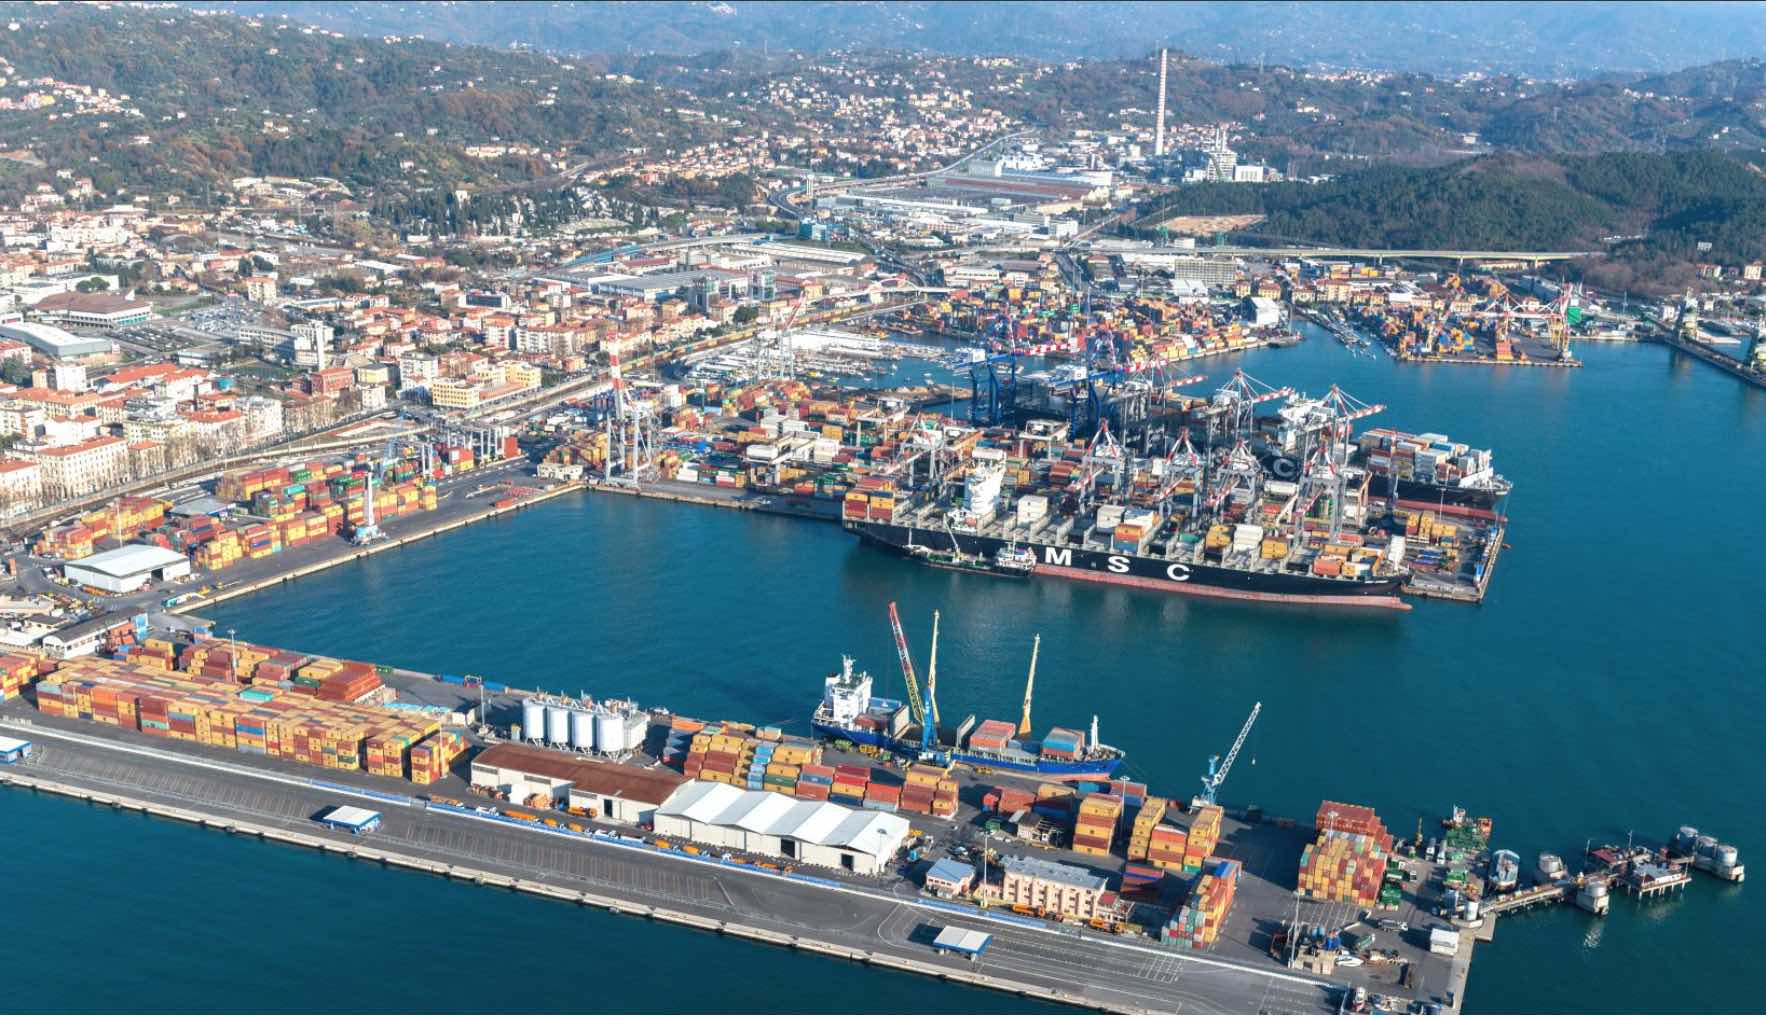 La Spezia is Europe's best container terminal - port.today